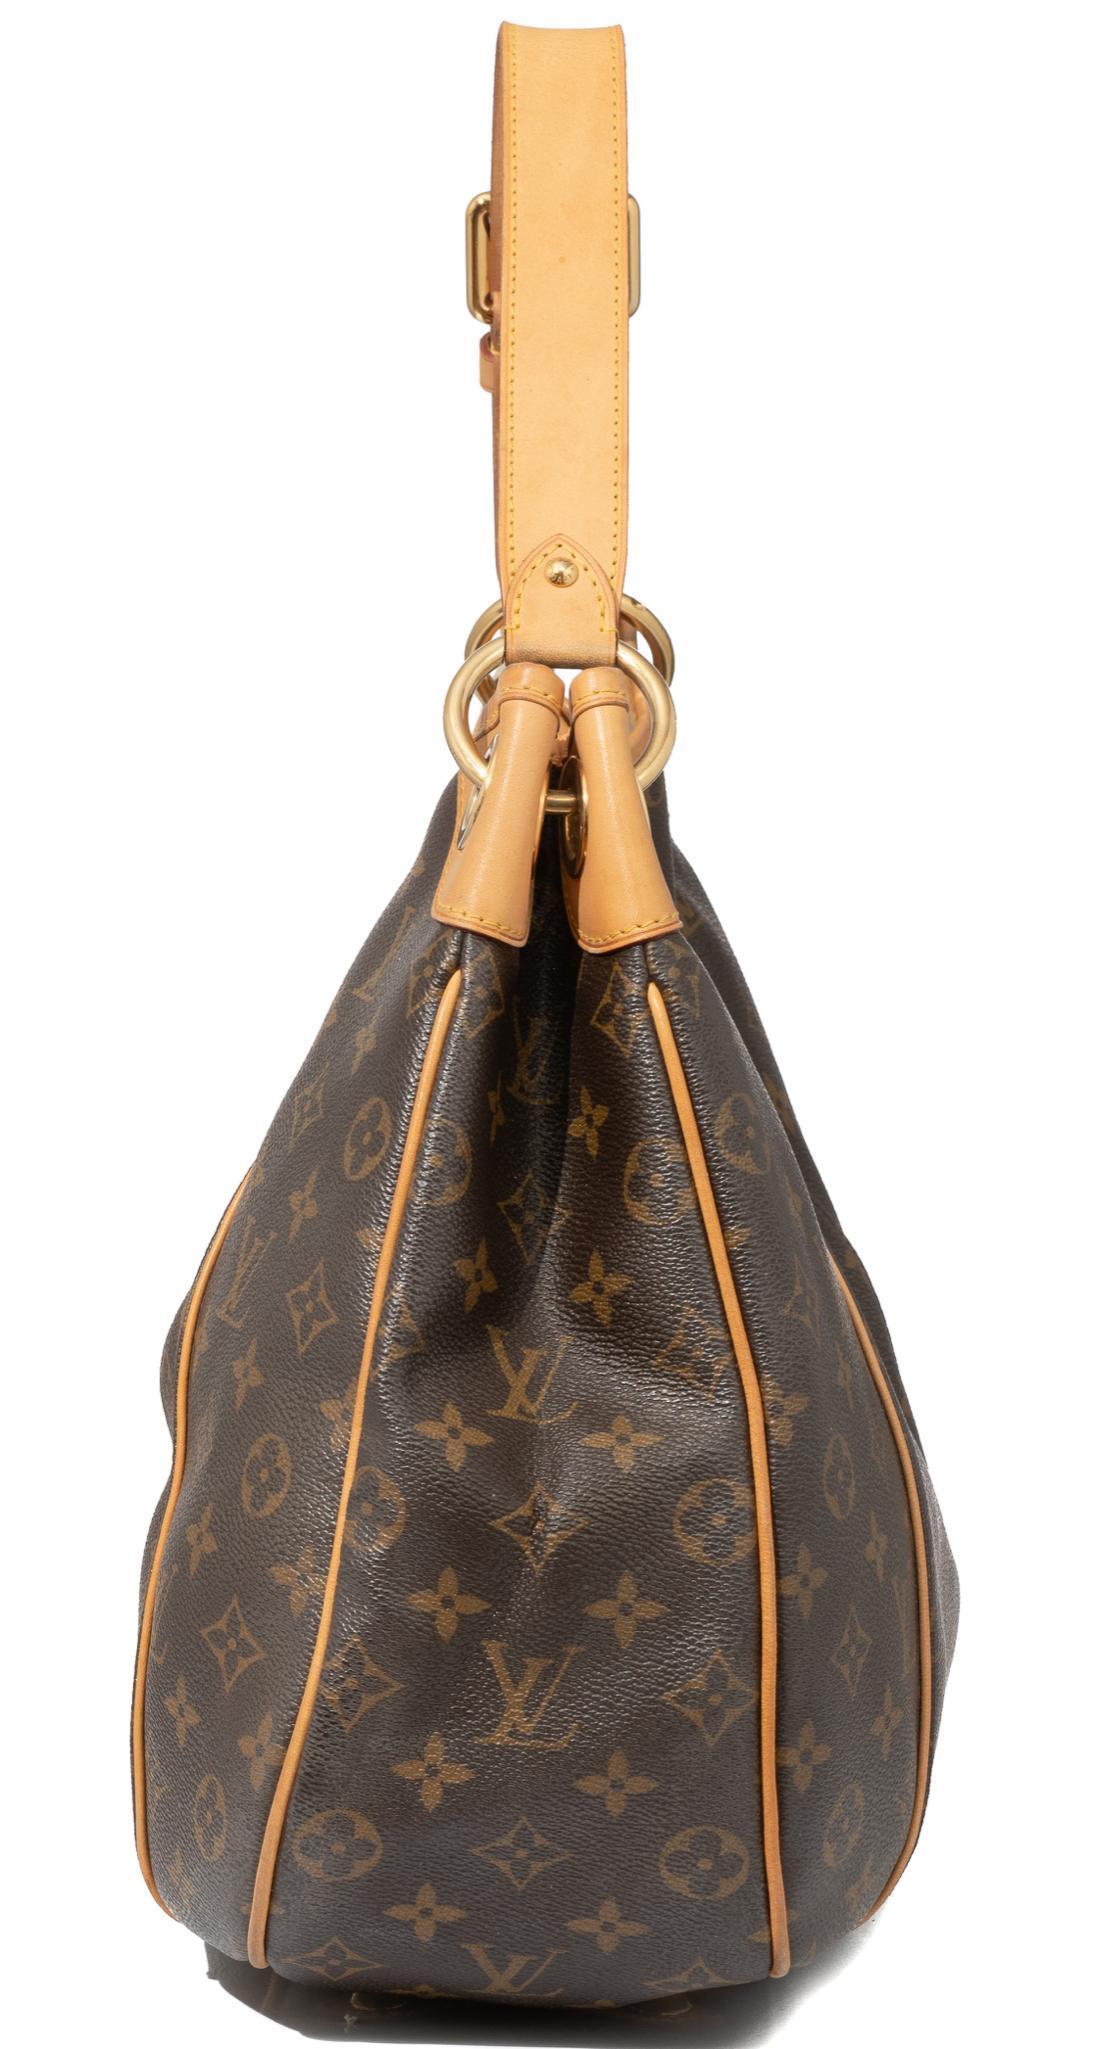 Sold at Auction: Louis Vuitton, LOUIS VUITTON GALLIERA MONOGRAM HANDBAG